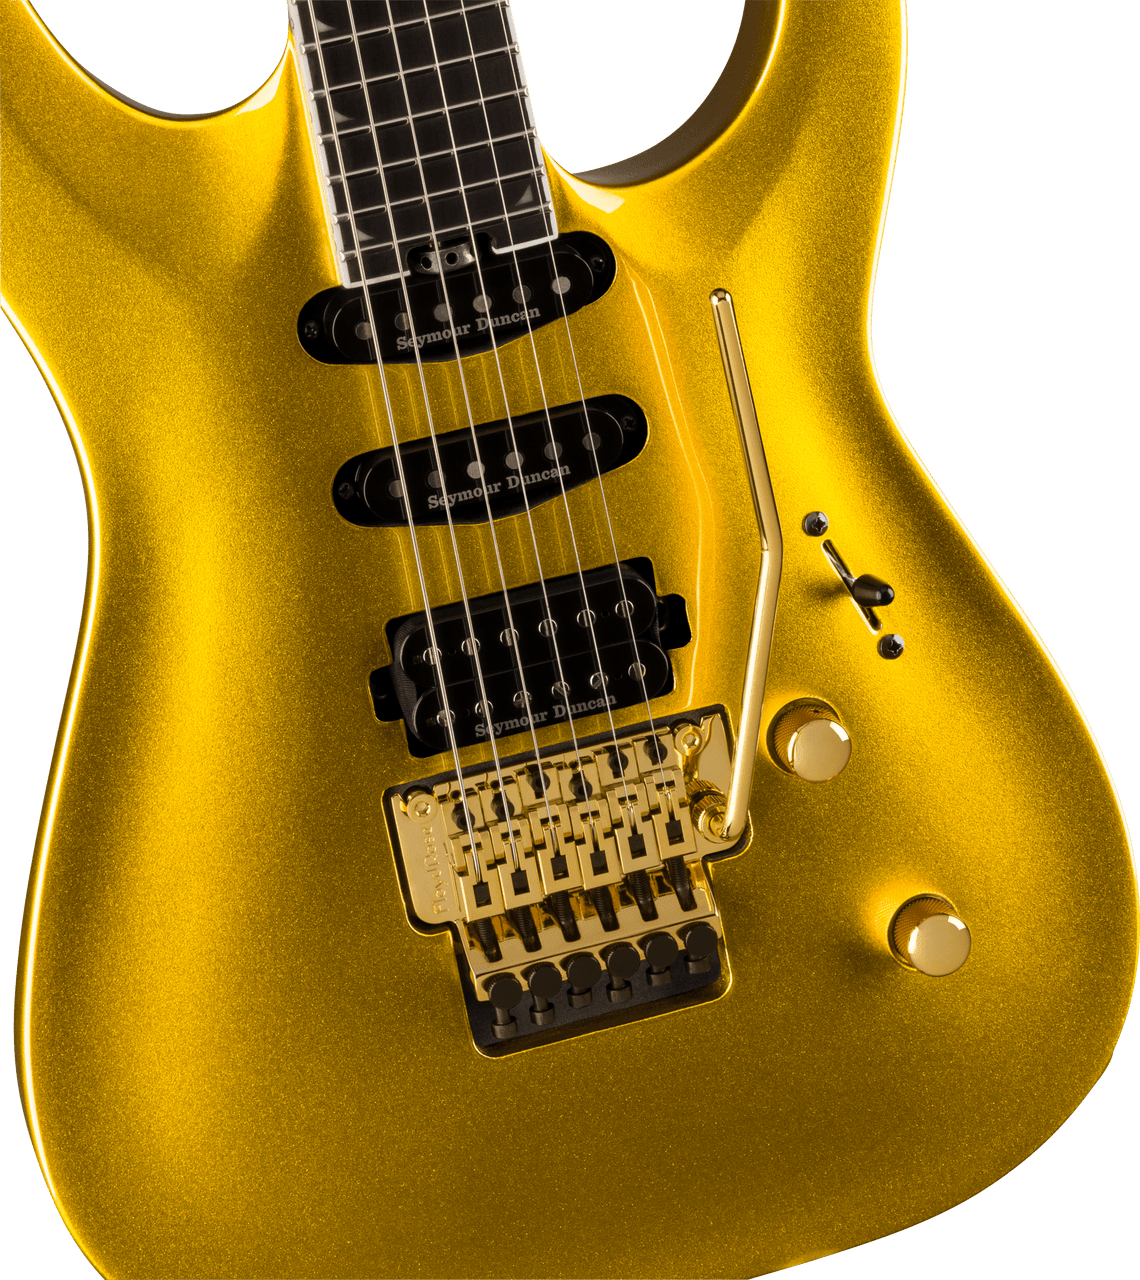 Matte Black Esp Electric Guitar with Yellow Binding, Gold Hardware